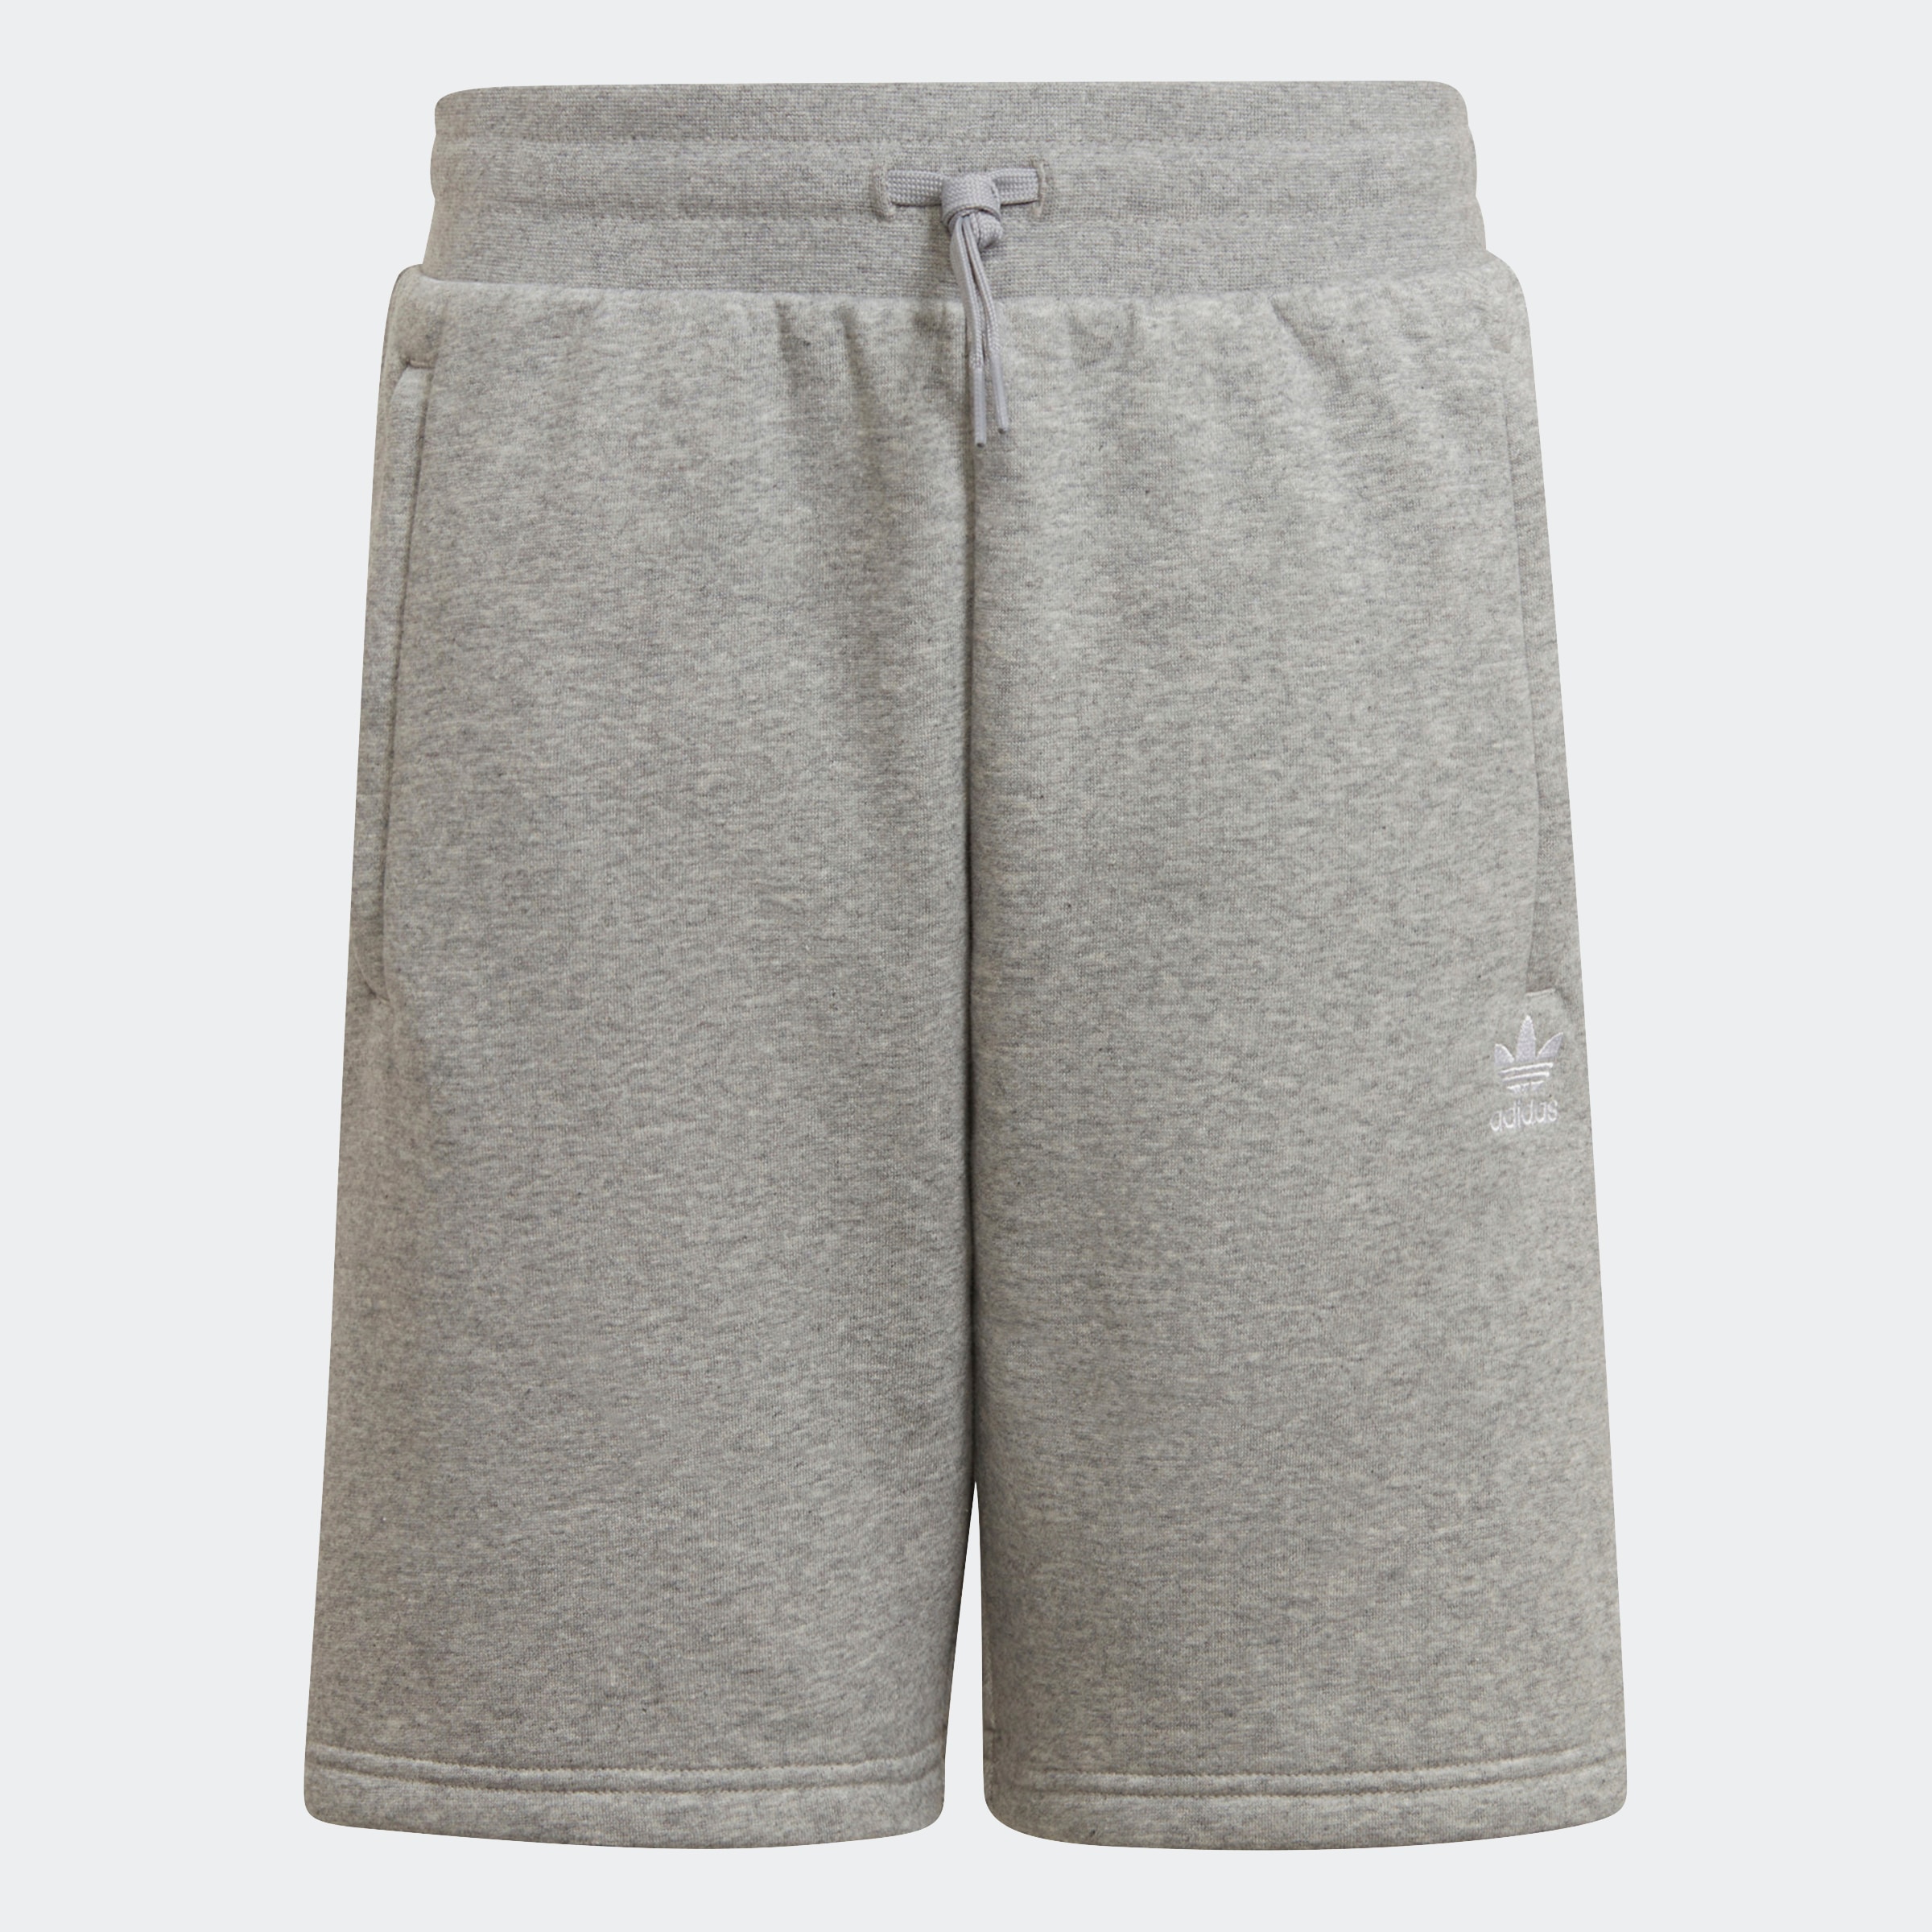 Boys, adidas Originals Junior Unisex Essentials Shorts - Grey, Grey, Size 7-8 Years|7-8 YEARS